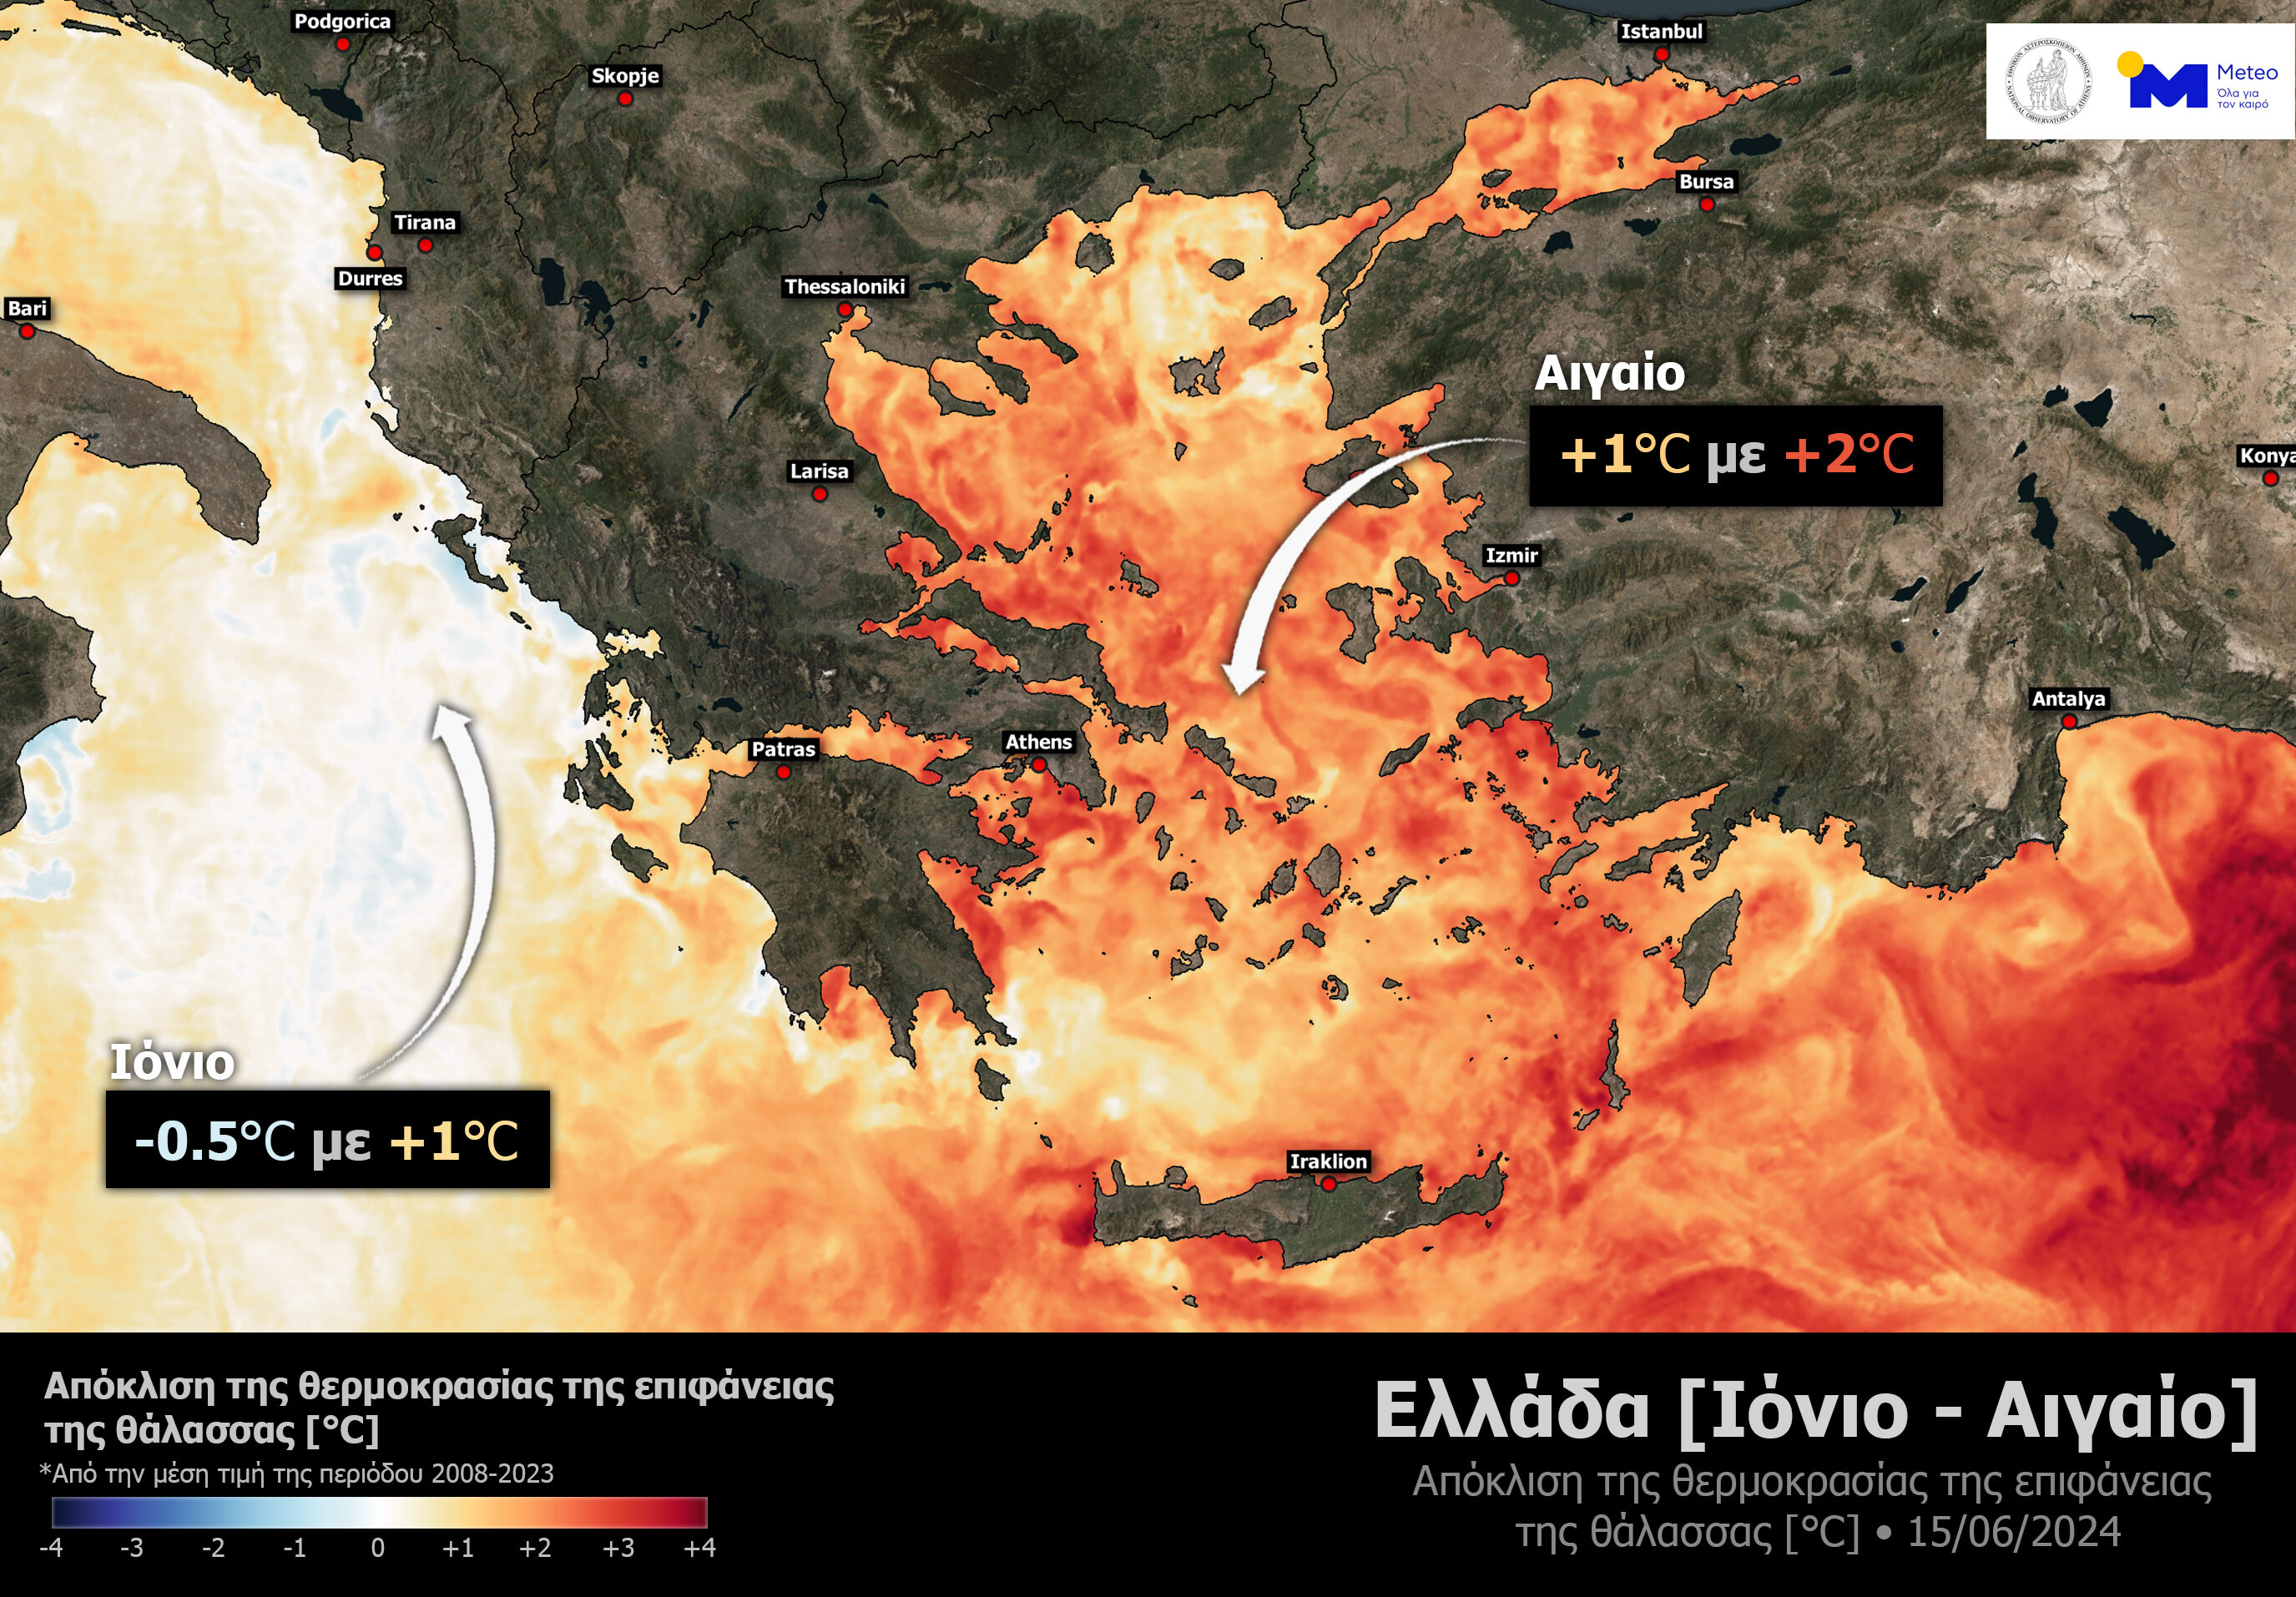 More information about "Σε υψηλά επίπεδα η θερμοκρασία της επιφάνειας της θάλασσας στο Αιγαίο πέλαγος"